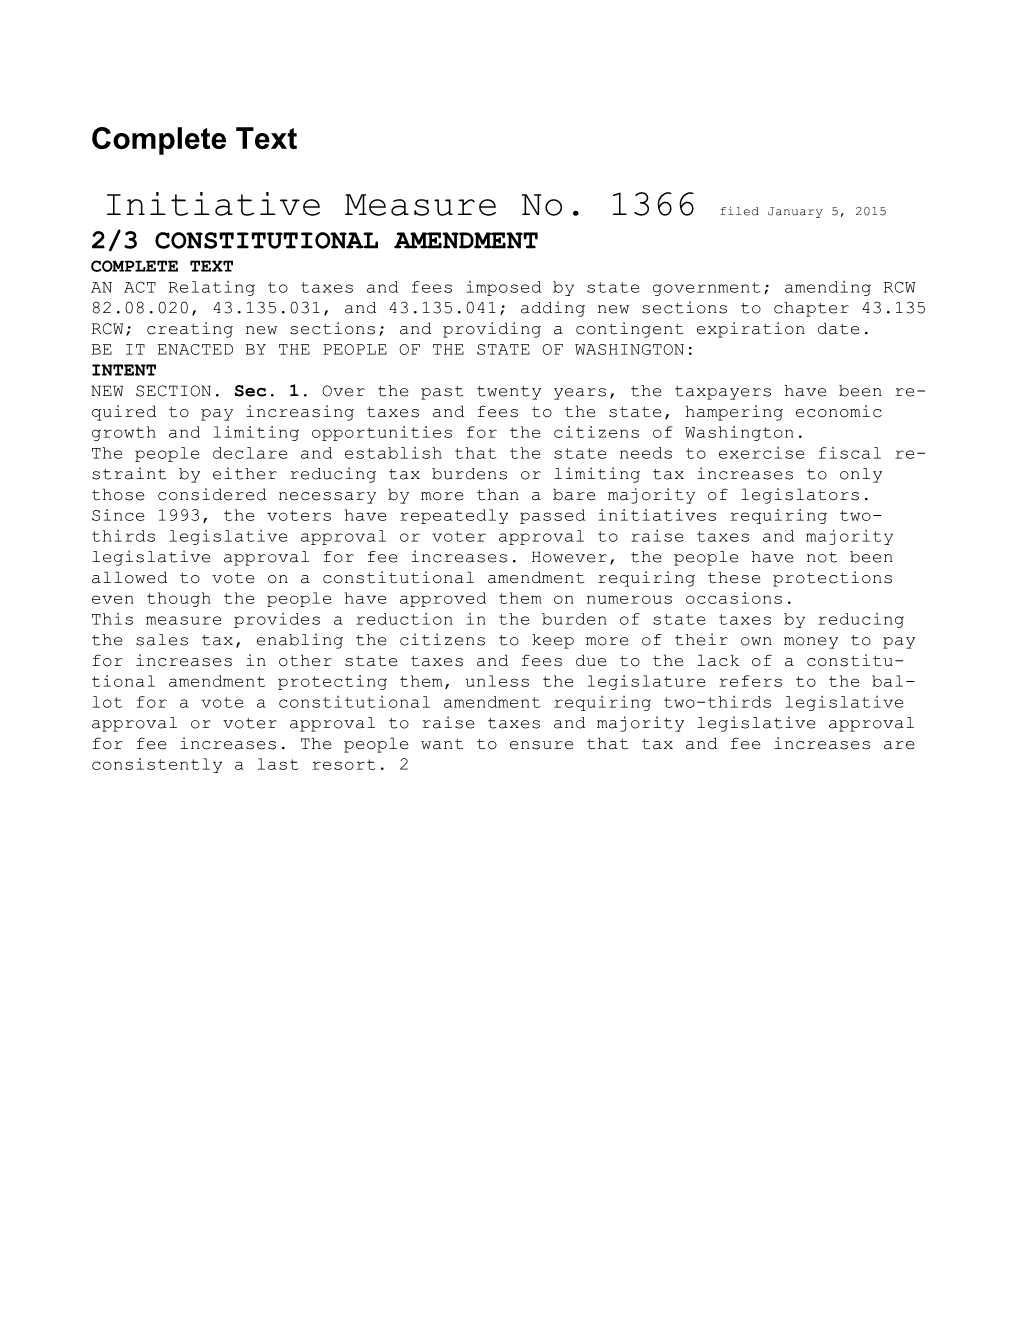 Initiative Measure No. 1366 Filed January 5, 2015